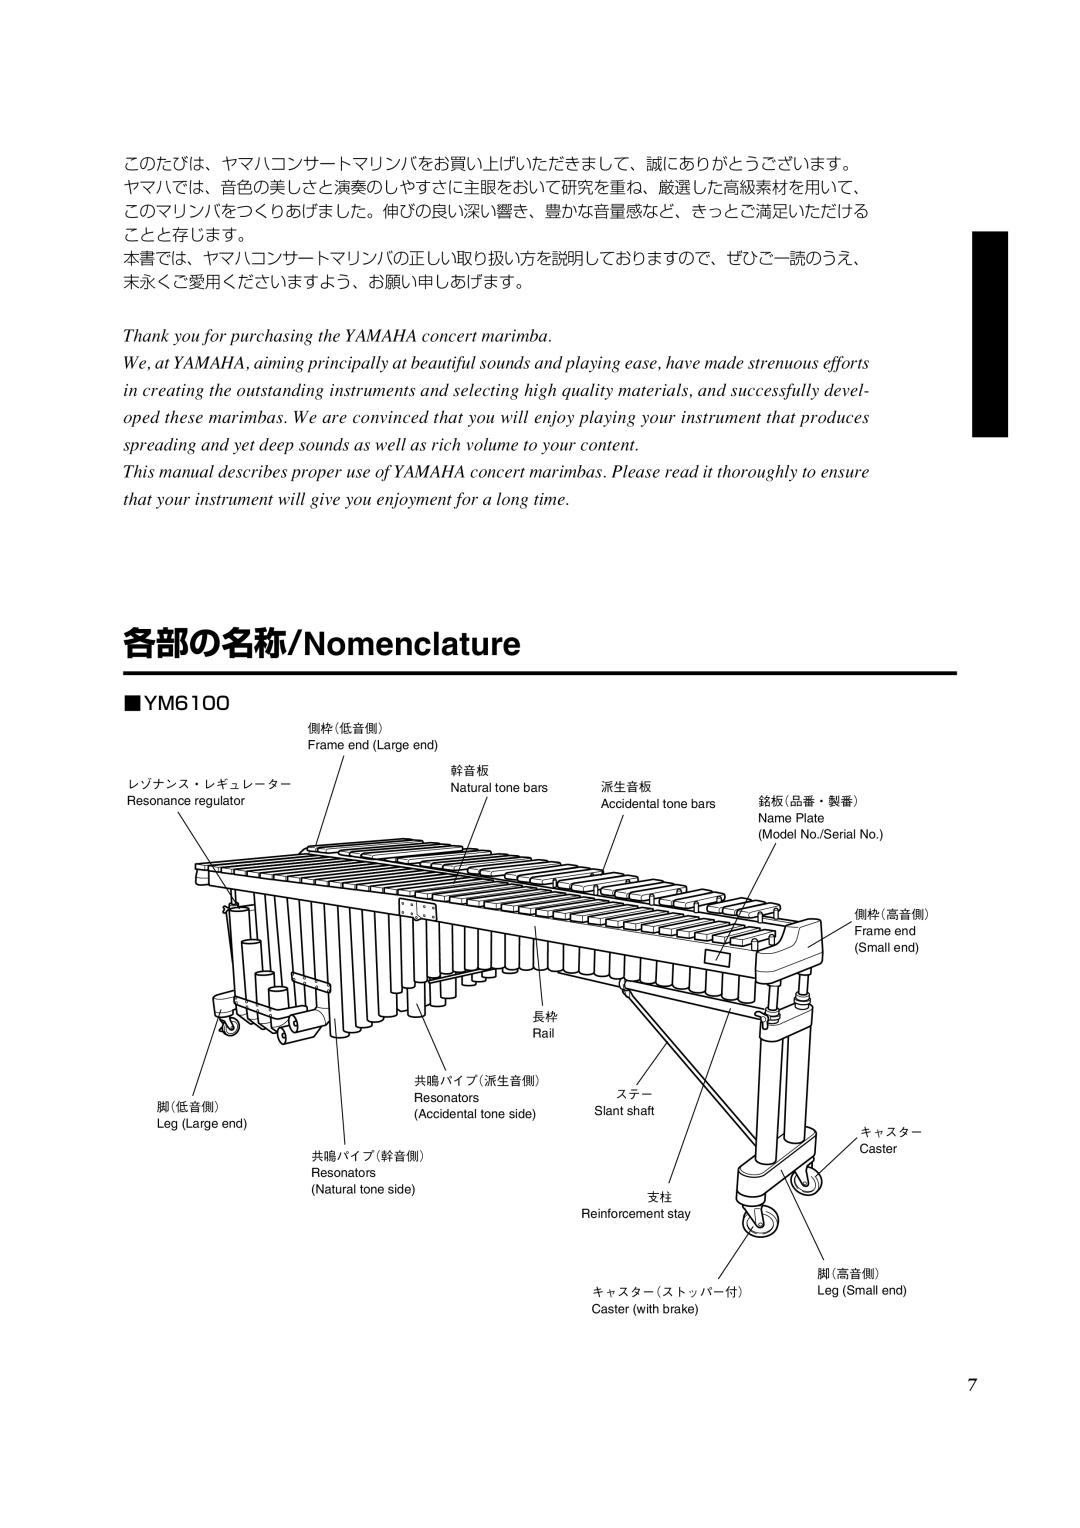 Yamaha YM6100, Concert Marimba owner manual 各部の名称/Nomenclature 